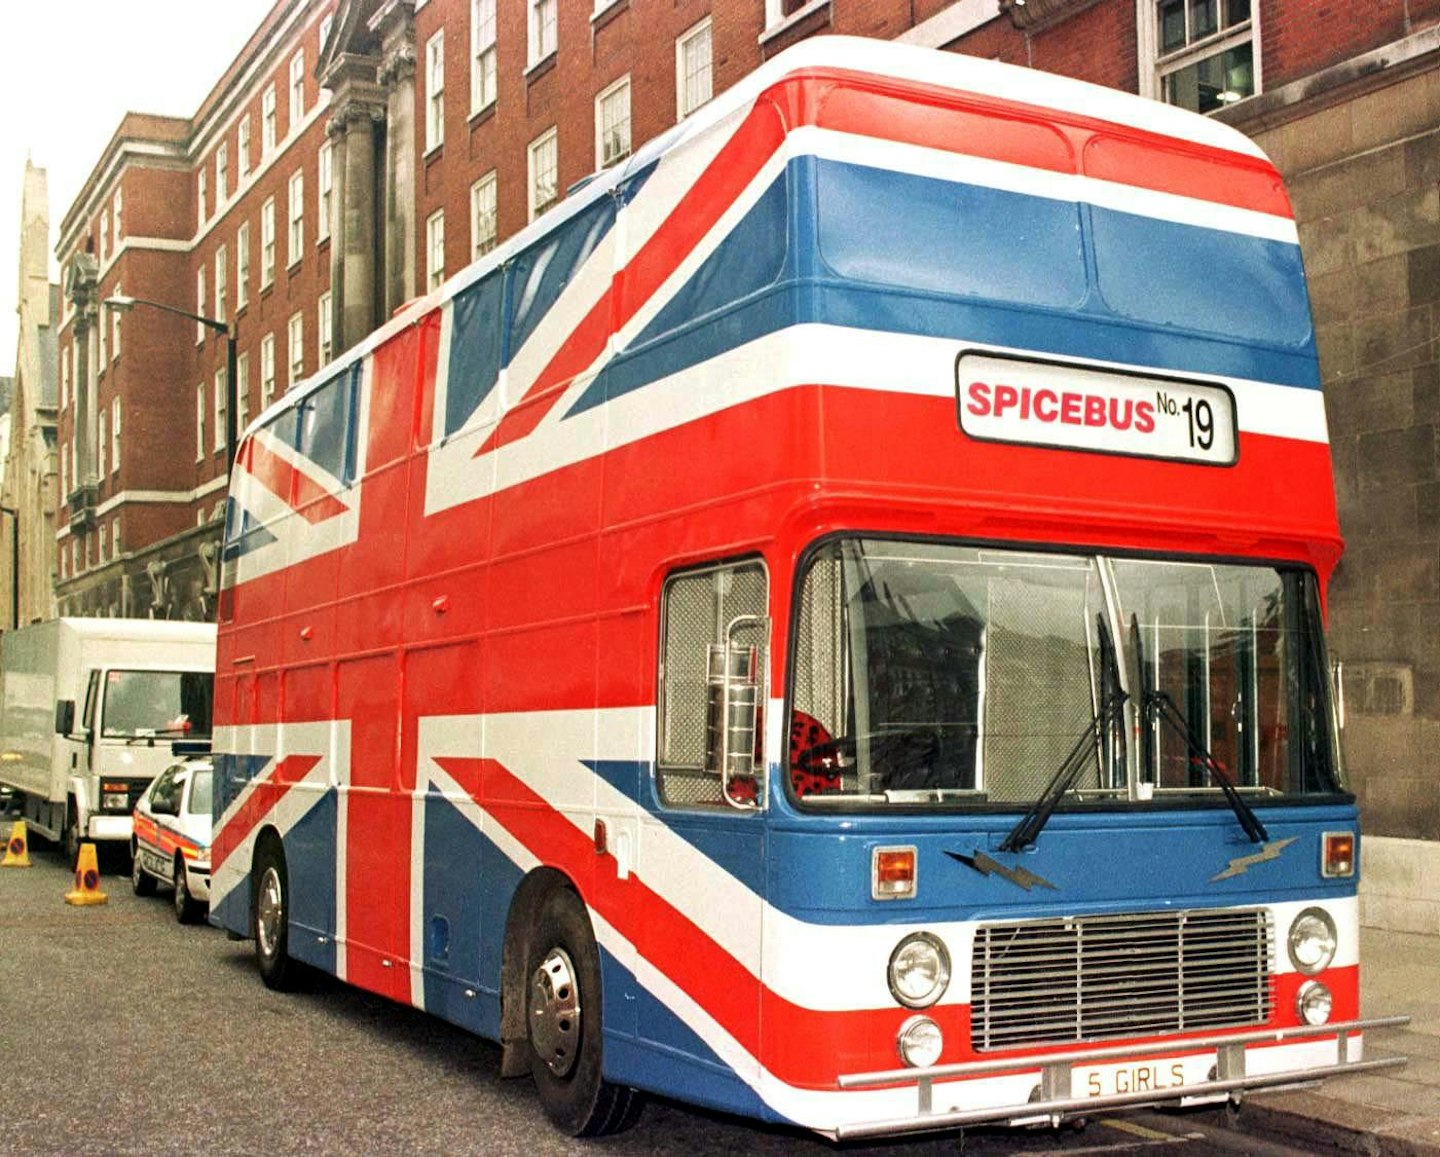 The fabulous spice bus